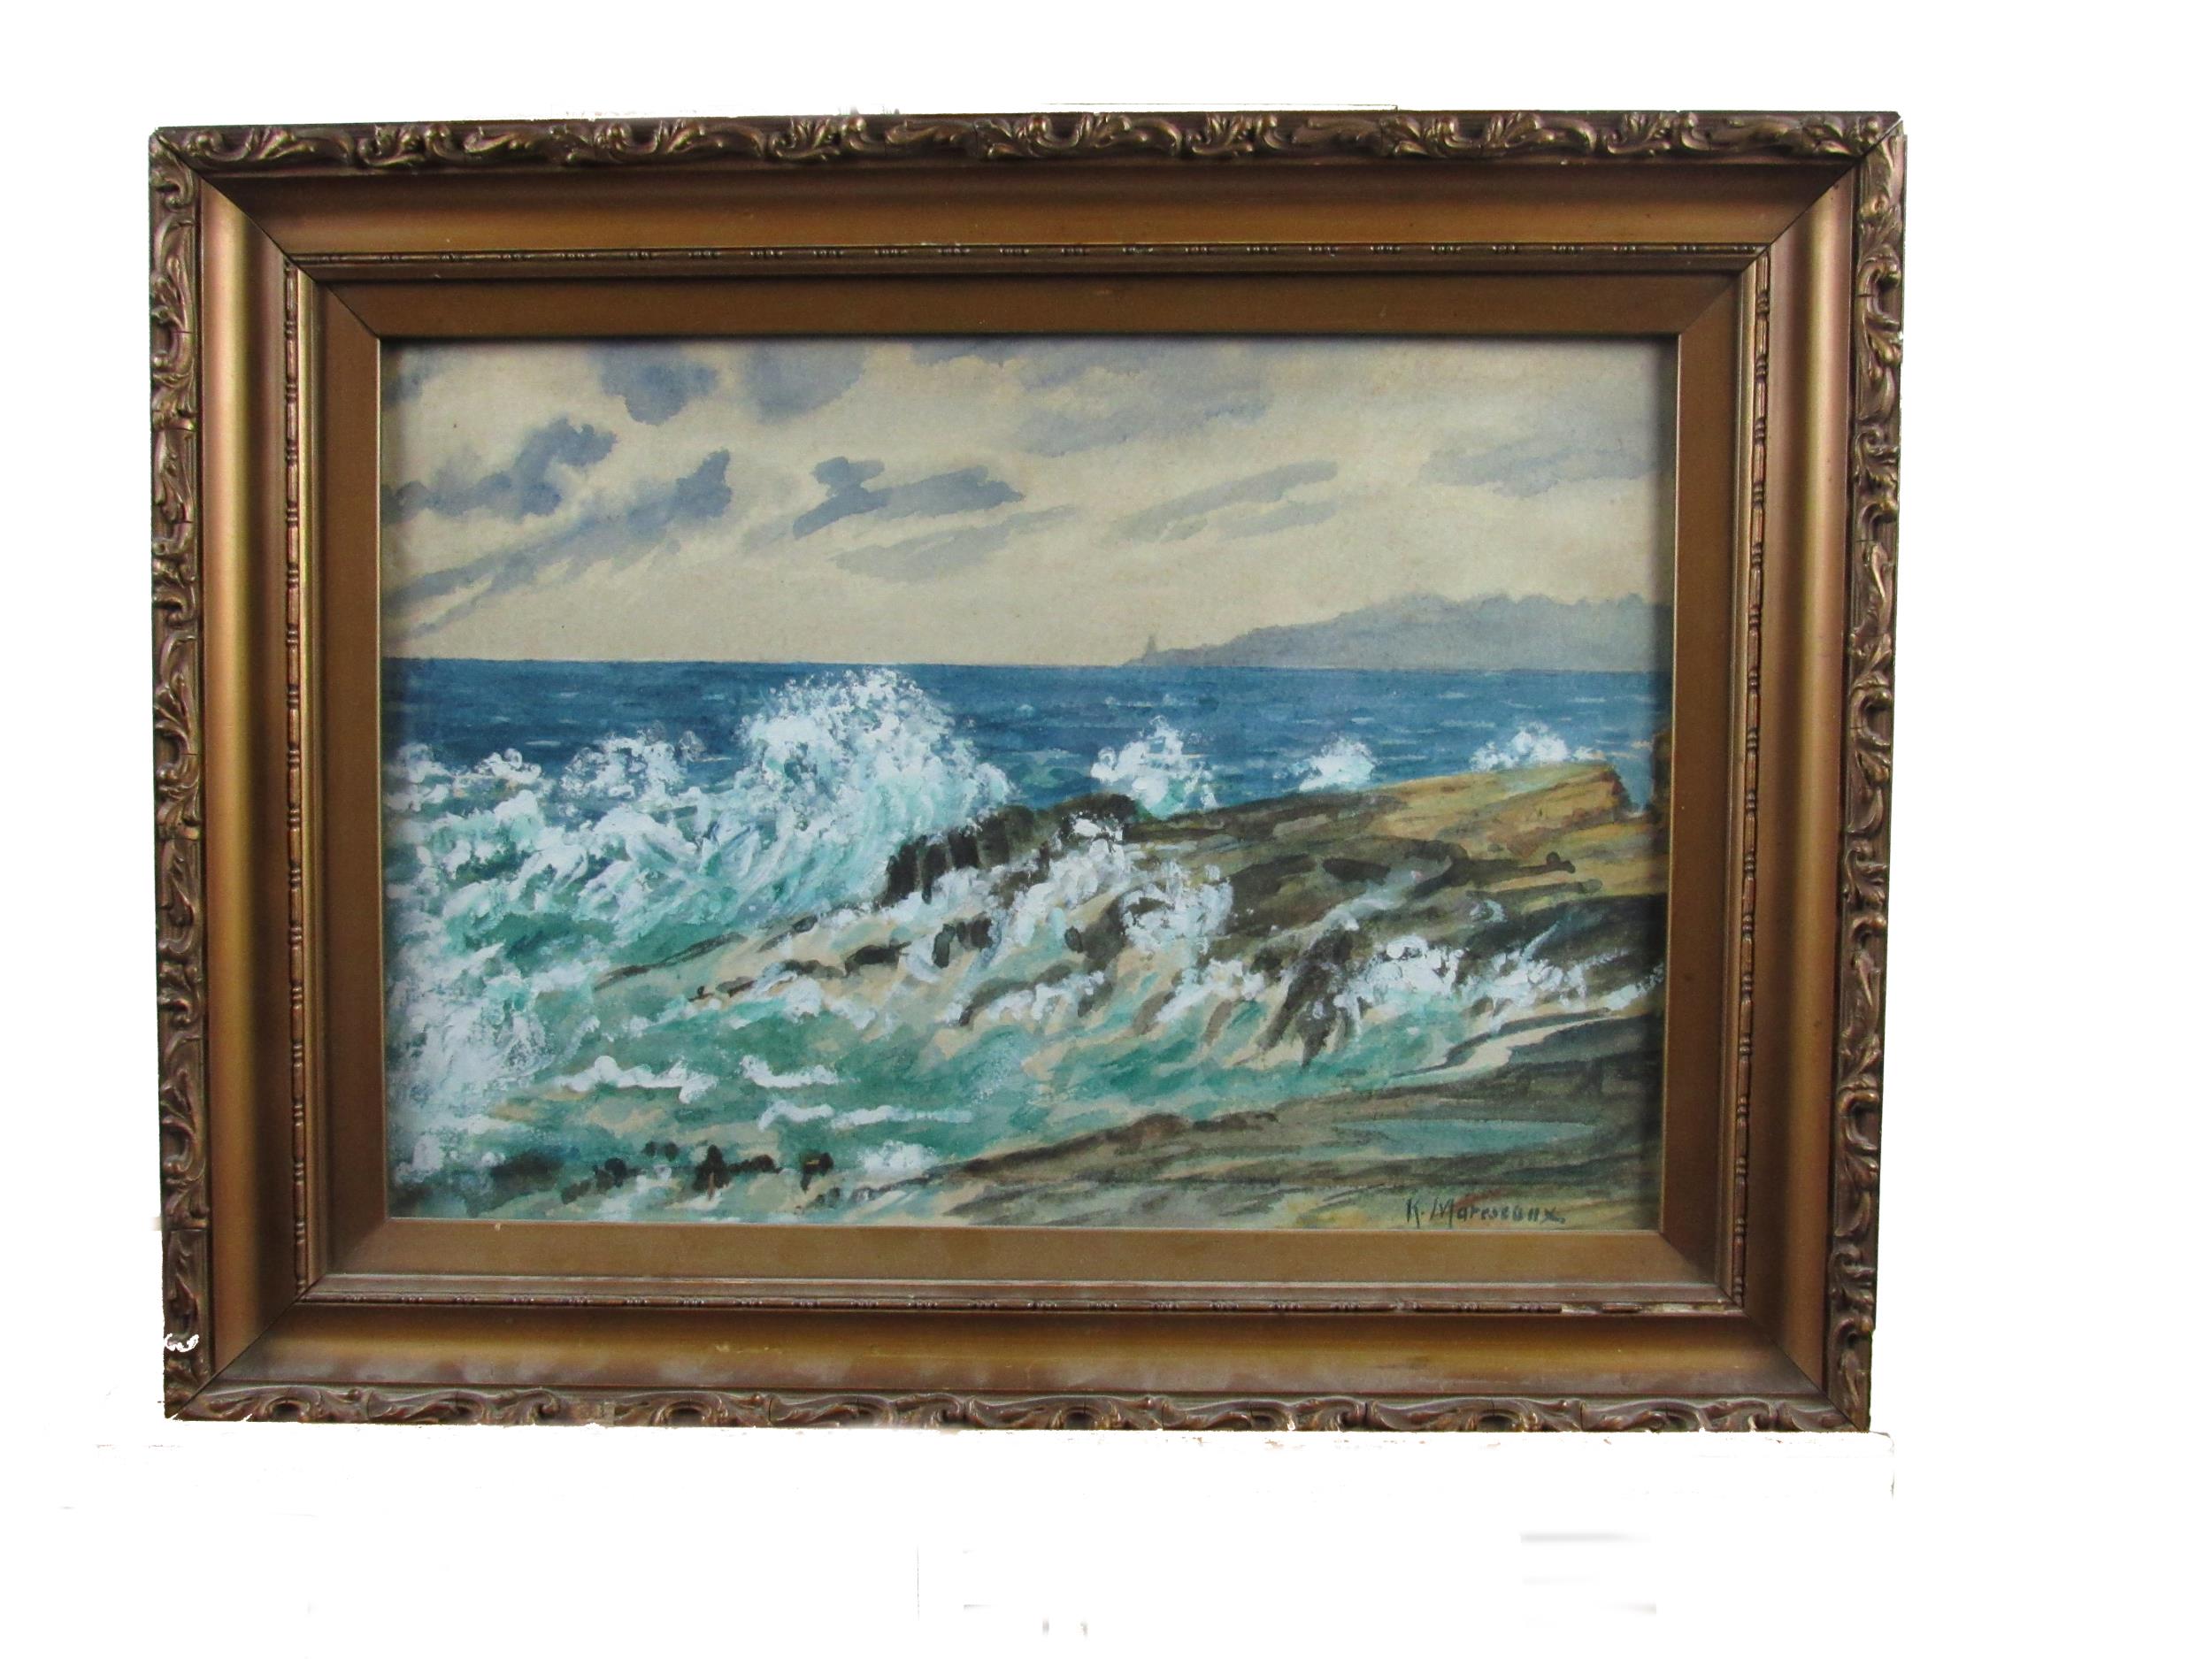 Kathleen Marescaux, Irish (1868-1944) "Study of Mediterranean Rough Sea," watercolour, approx. 25cms